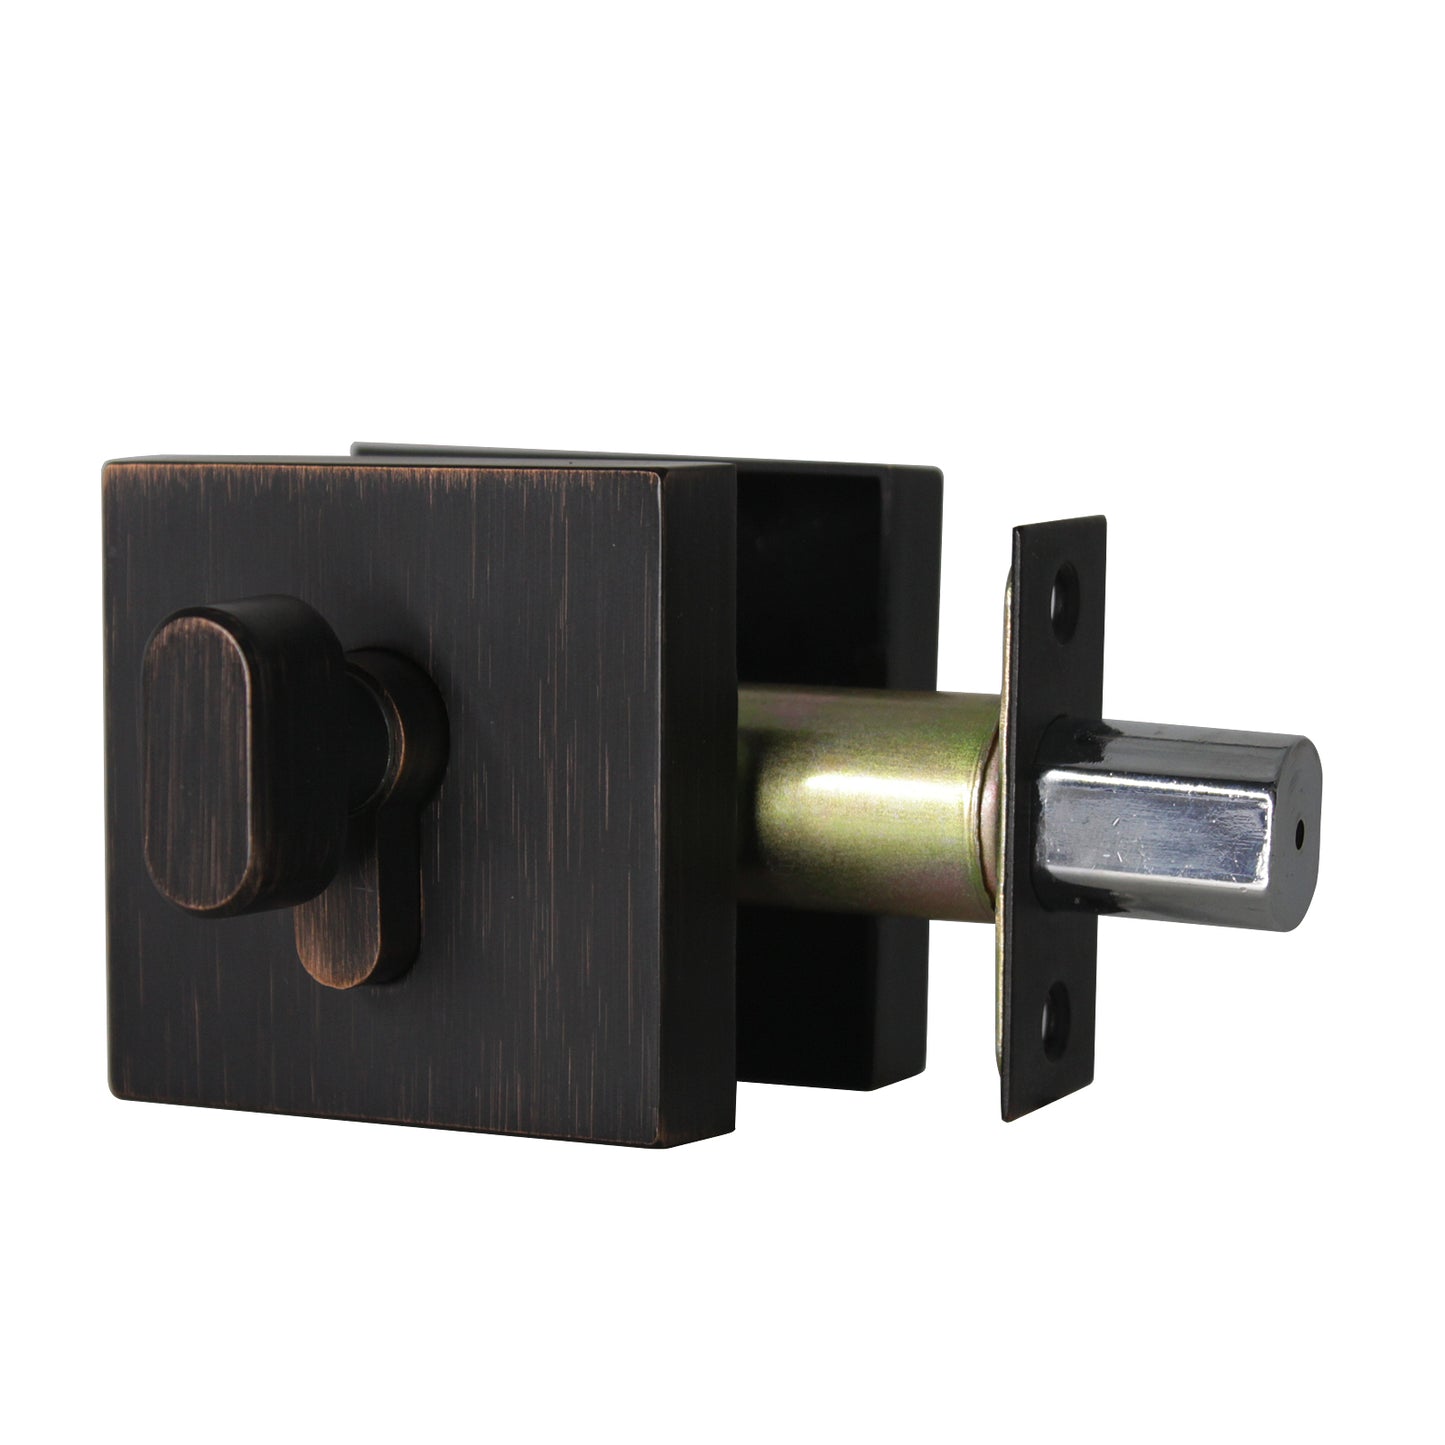 Square Design Door Deadbolt with Single Cylinder Lock Oil Rubbed Bronze Finish DLD105ORB